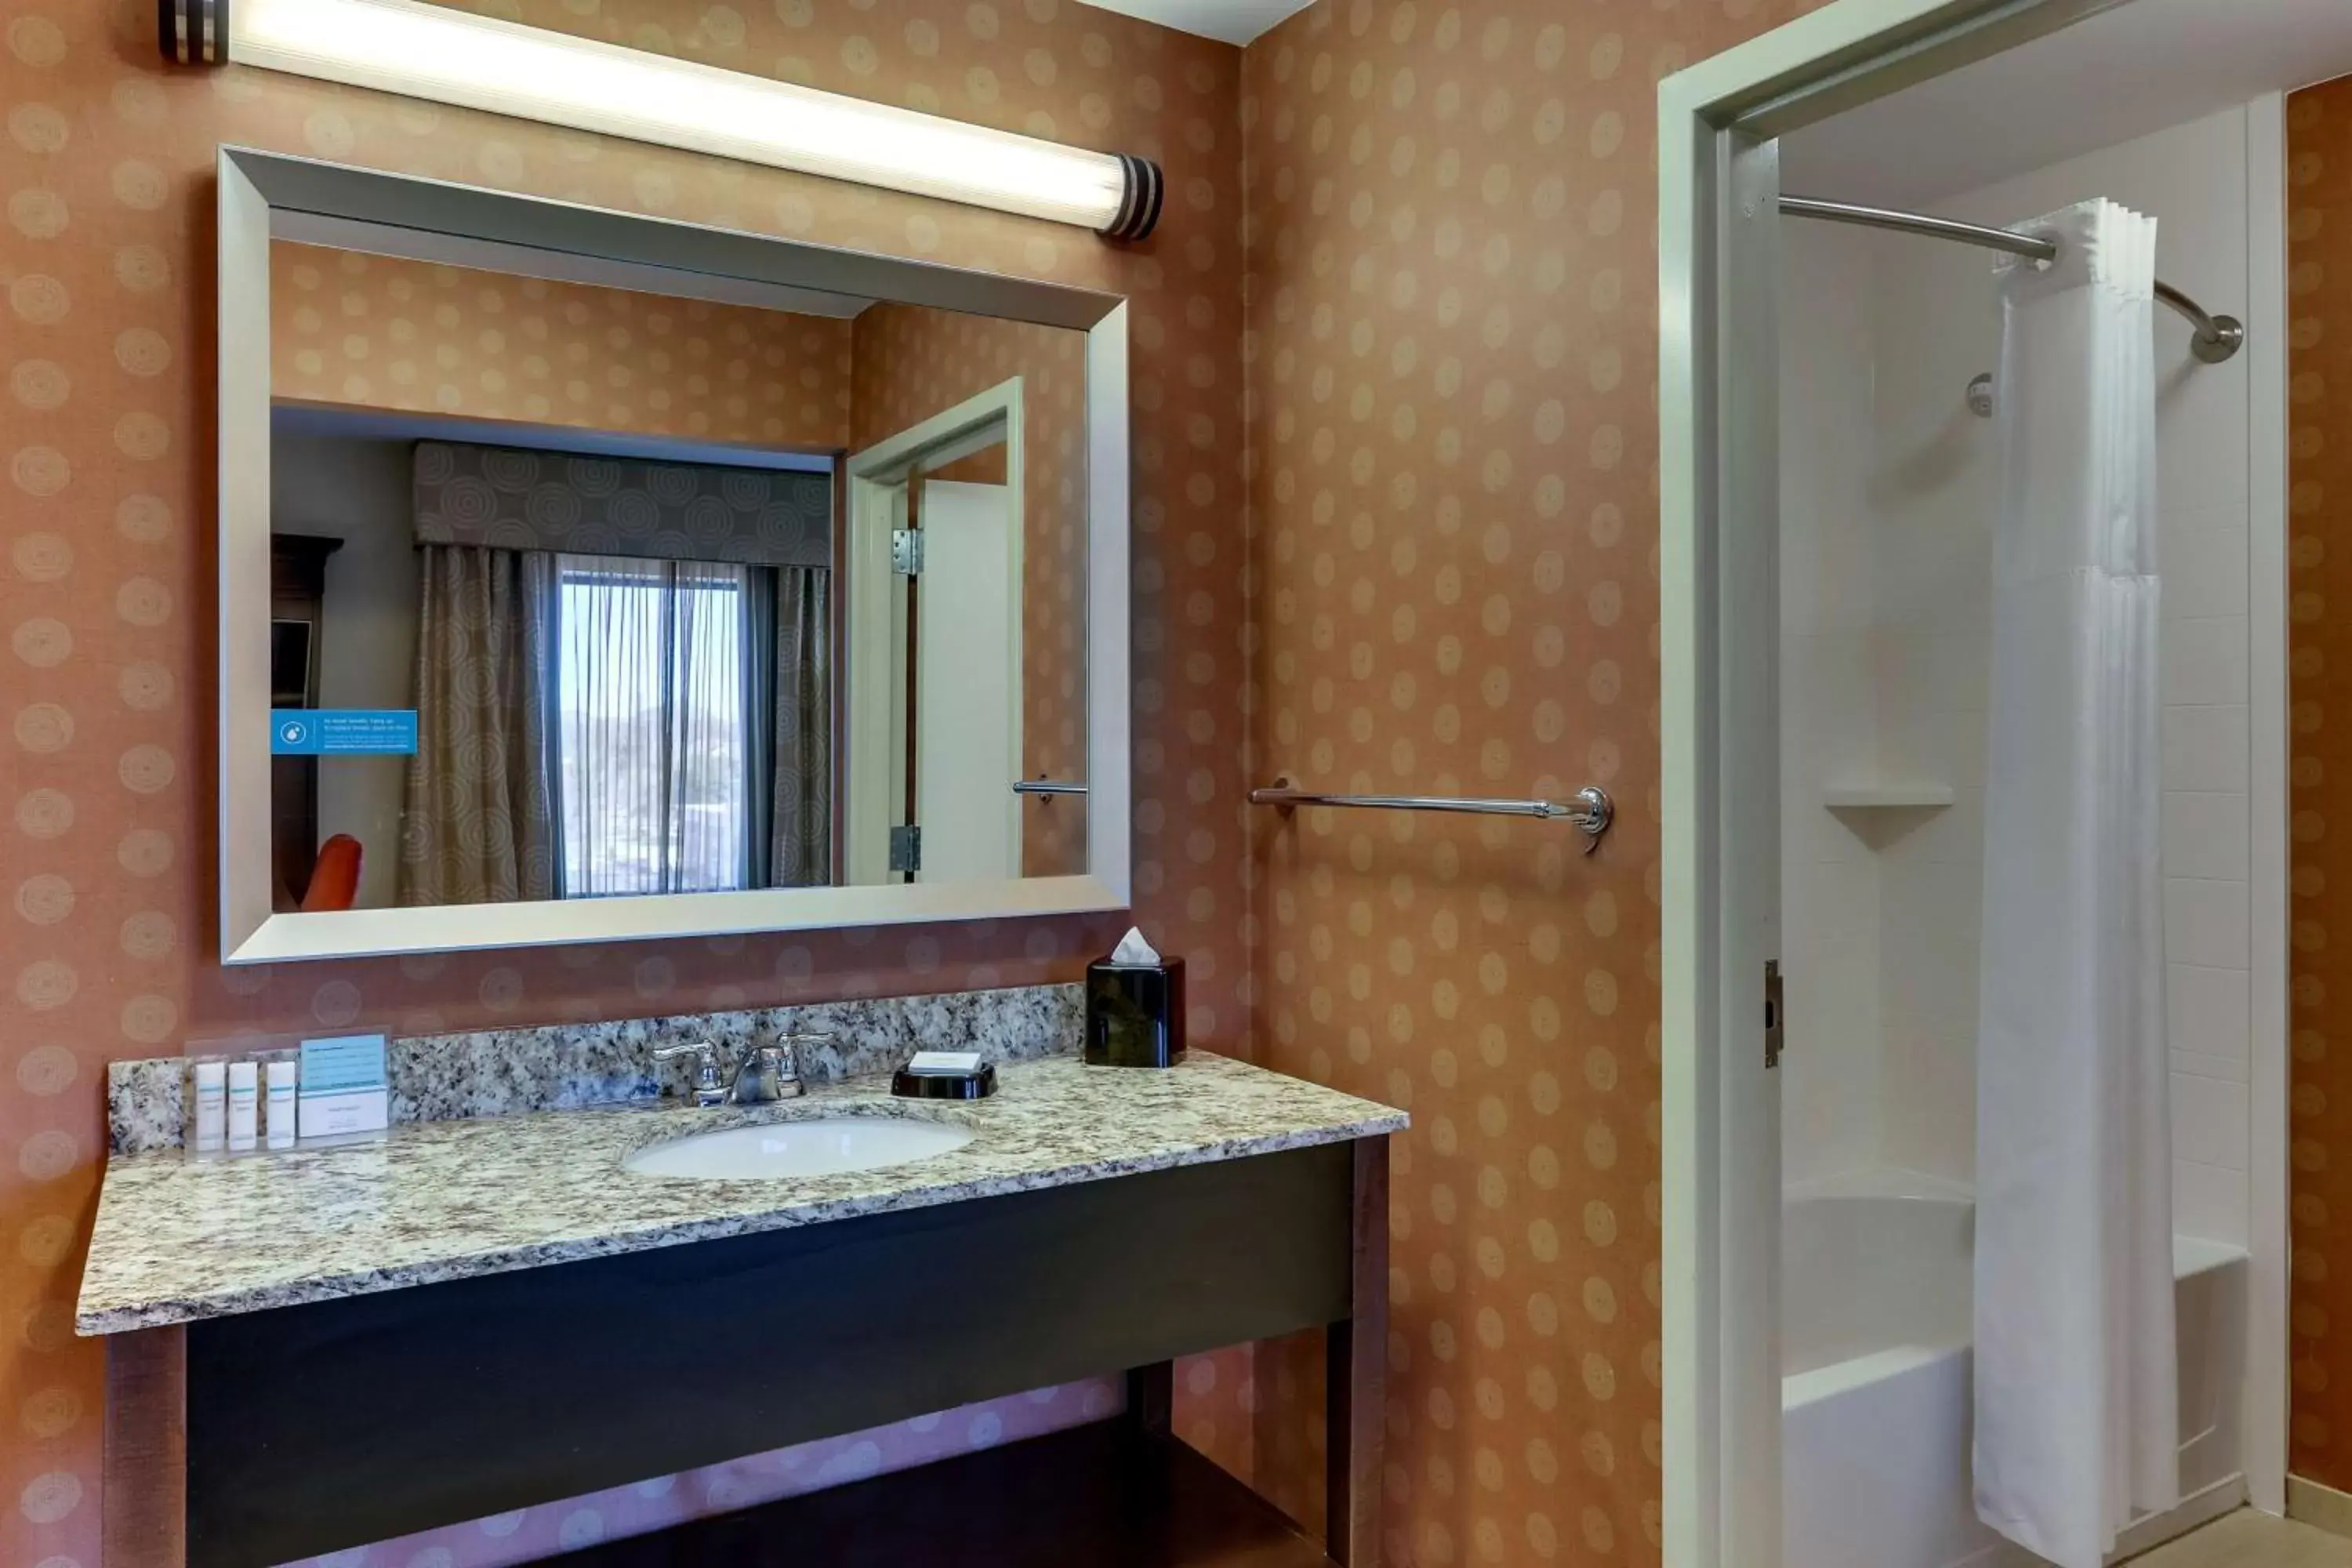 Bathroom in Hampton Inn & Suites - Hartsville, SC